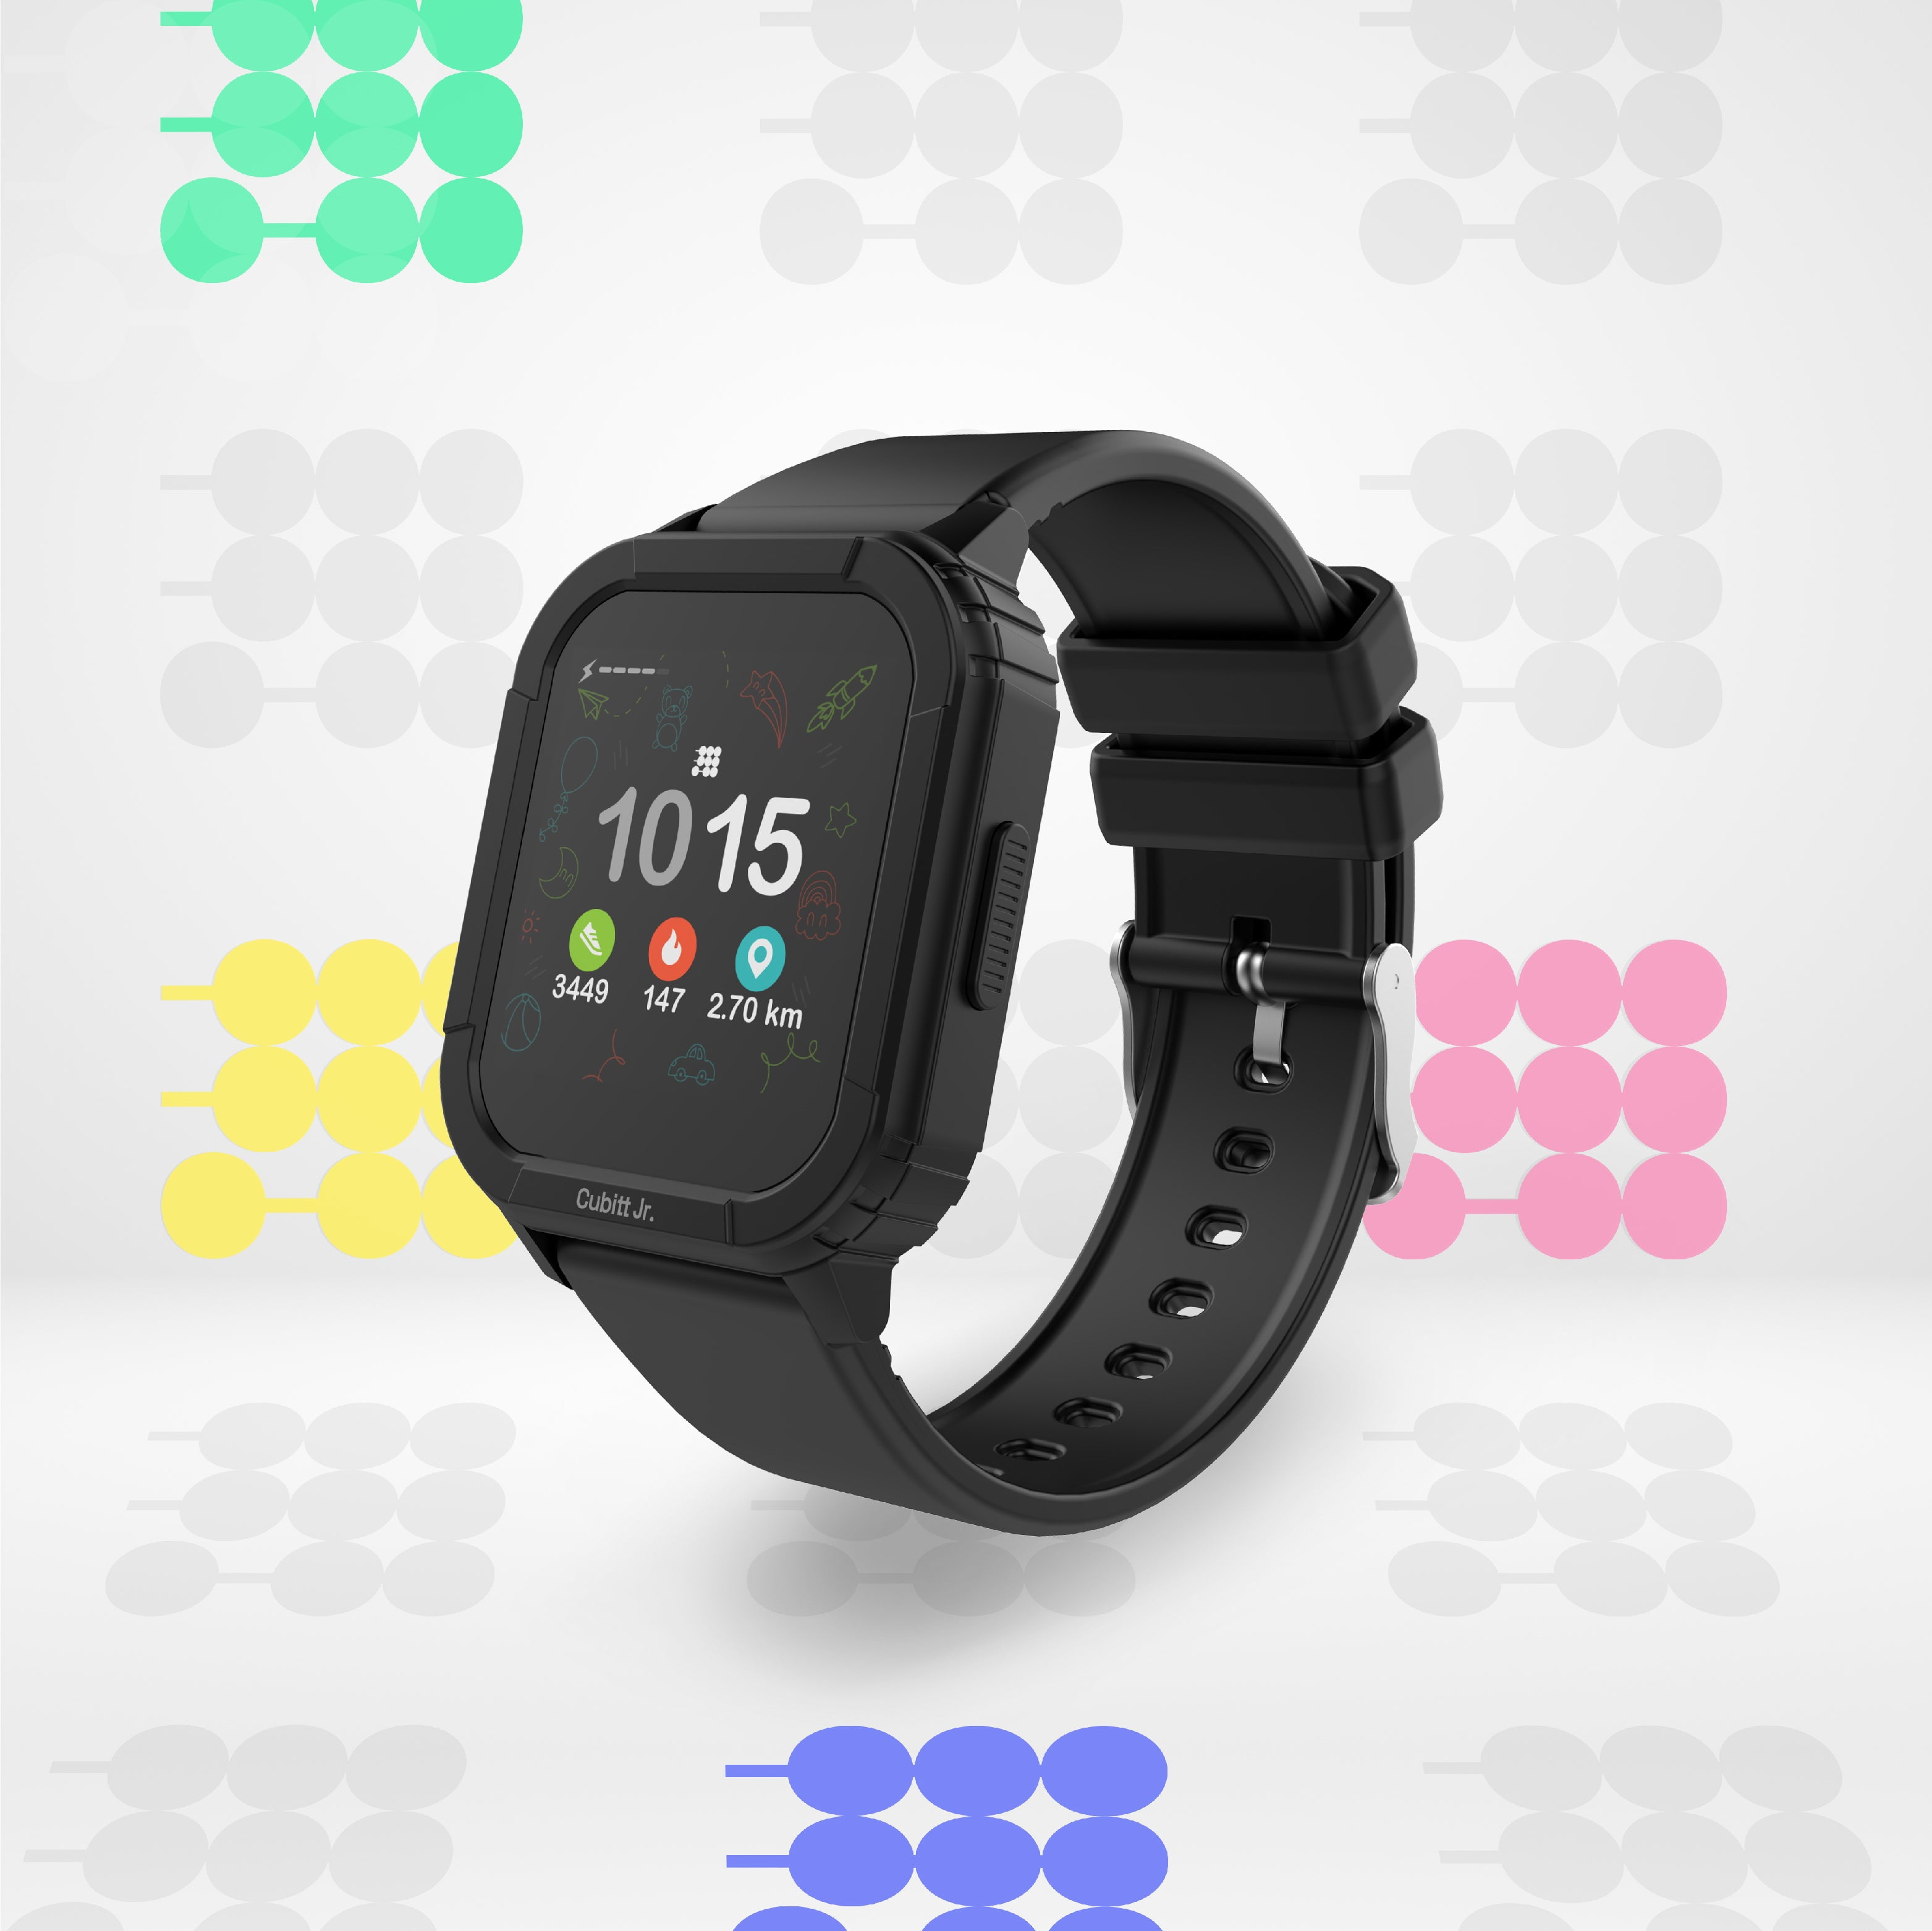 Reloj inteligente smartwatch para niños Cubitt Junior CTJR - Lila